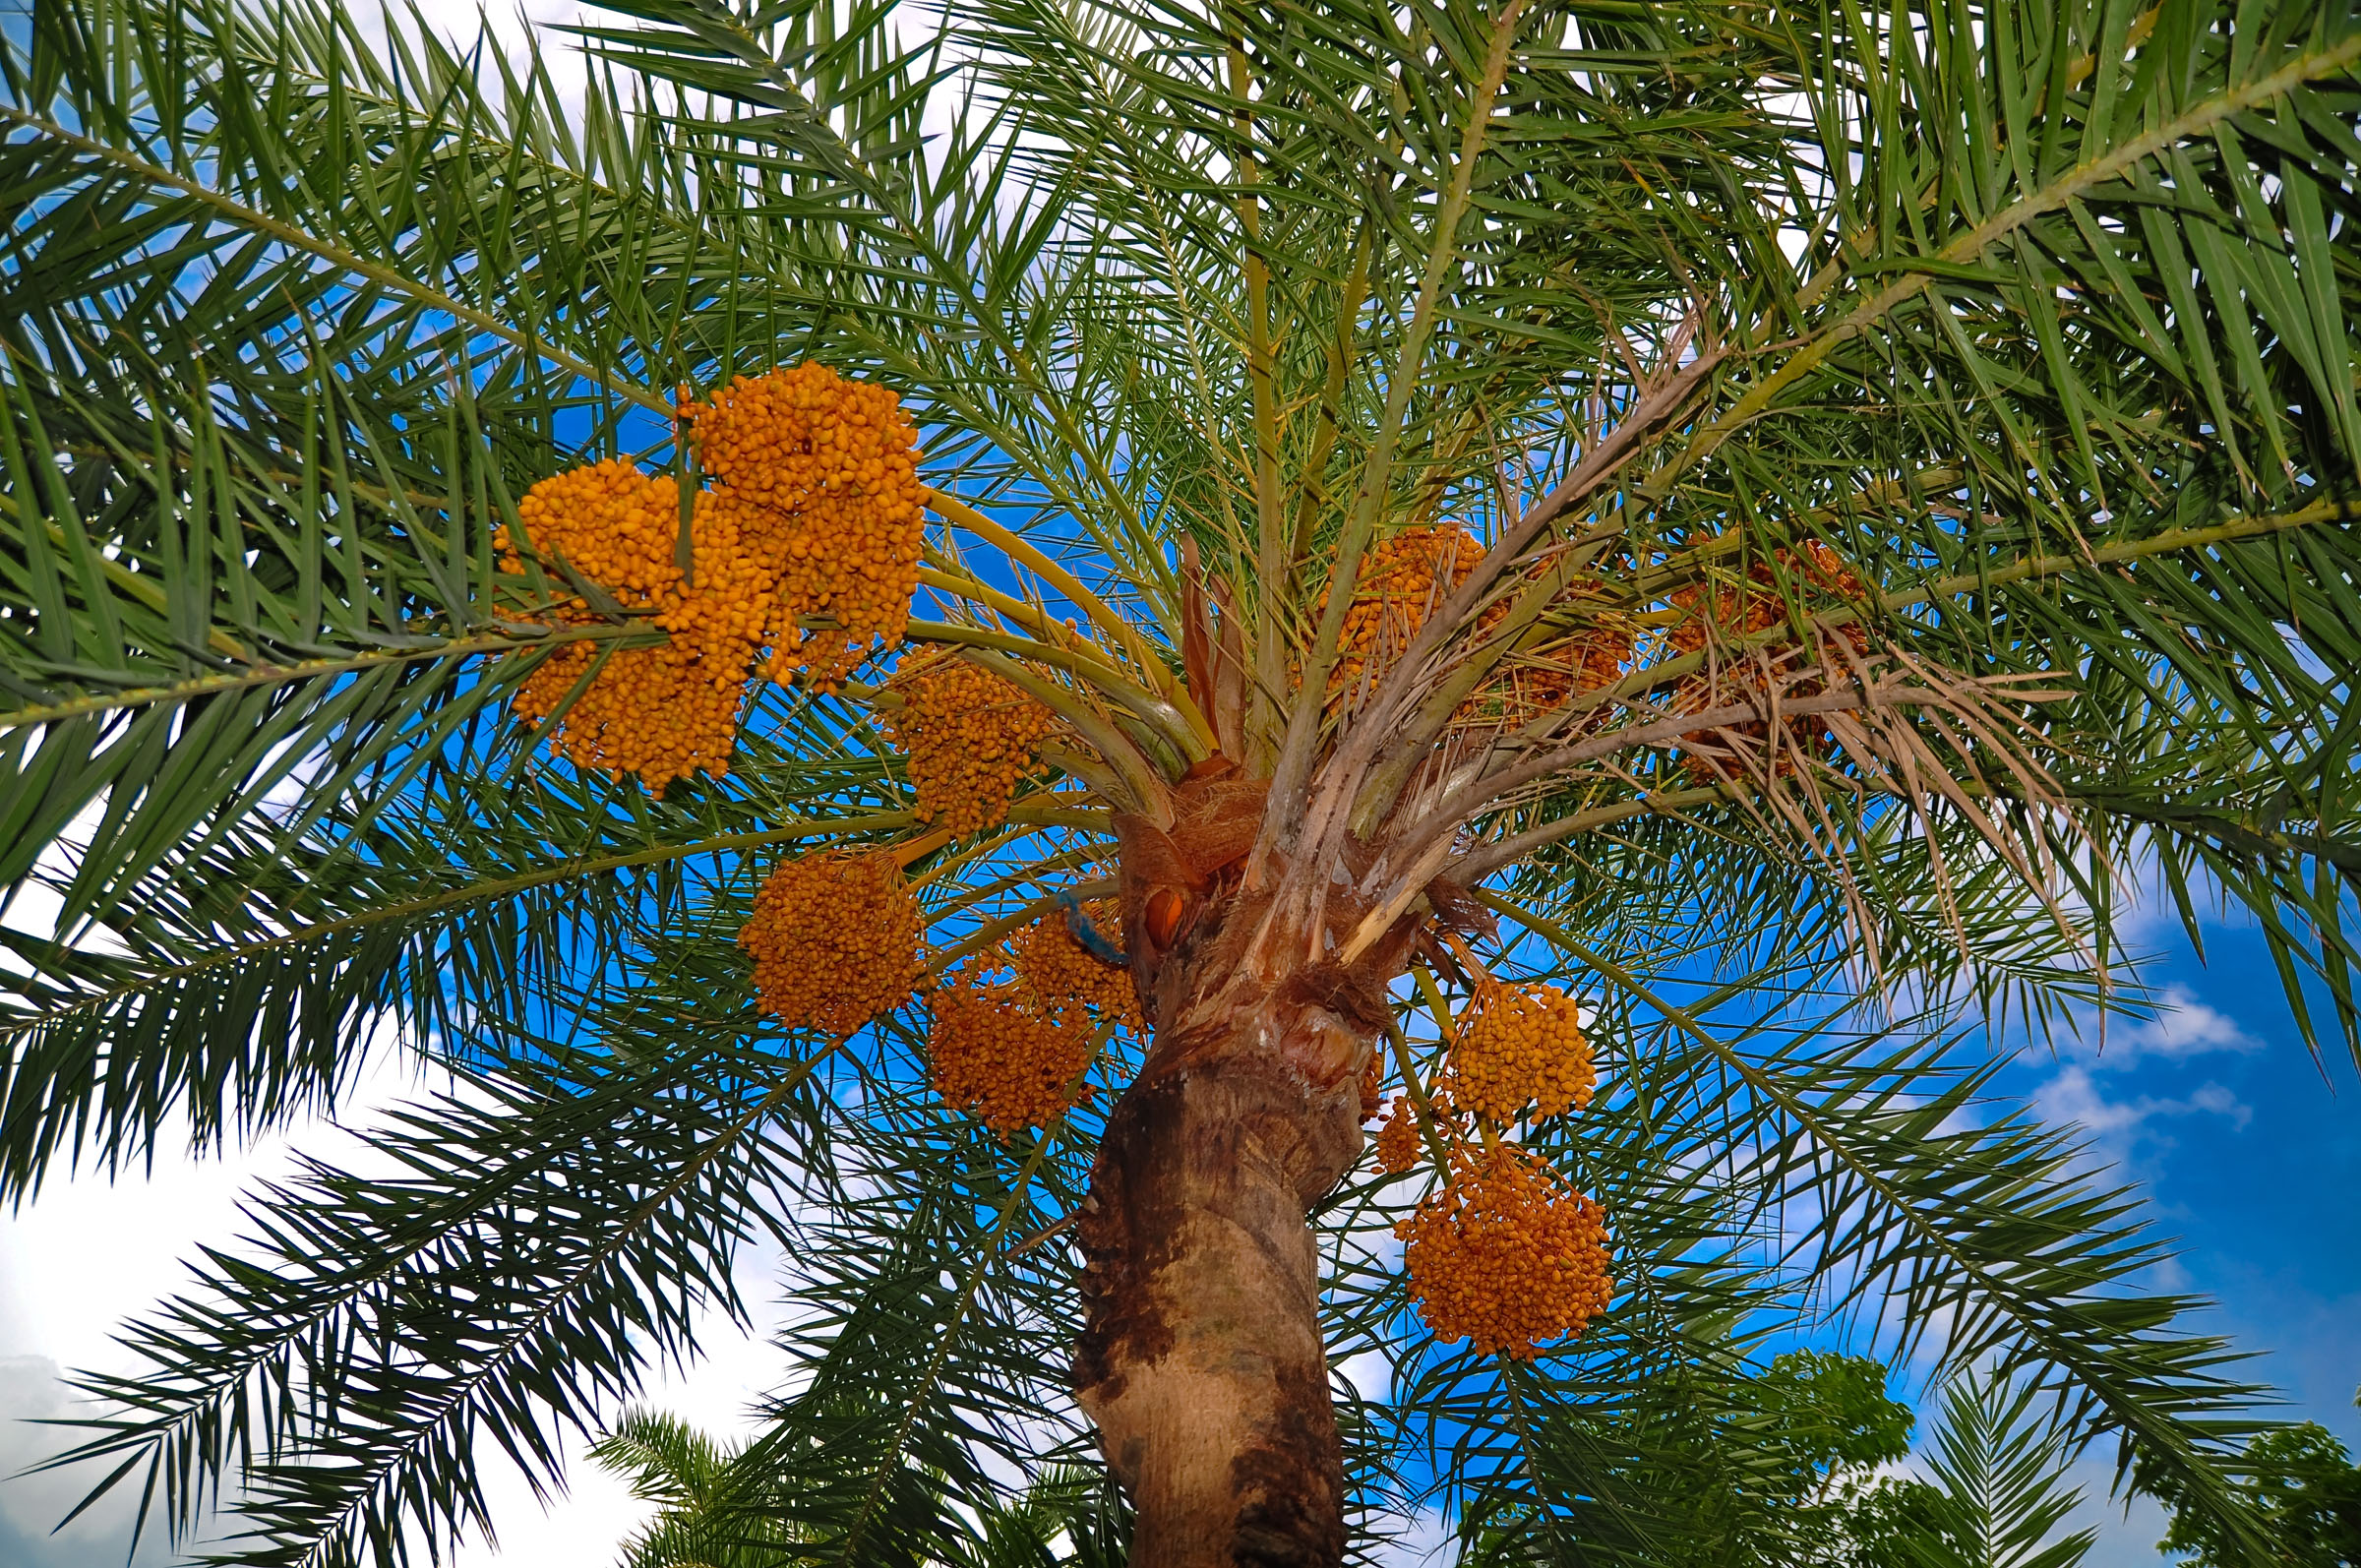 File:Date palm tree.jpg - Wikimedia Commons